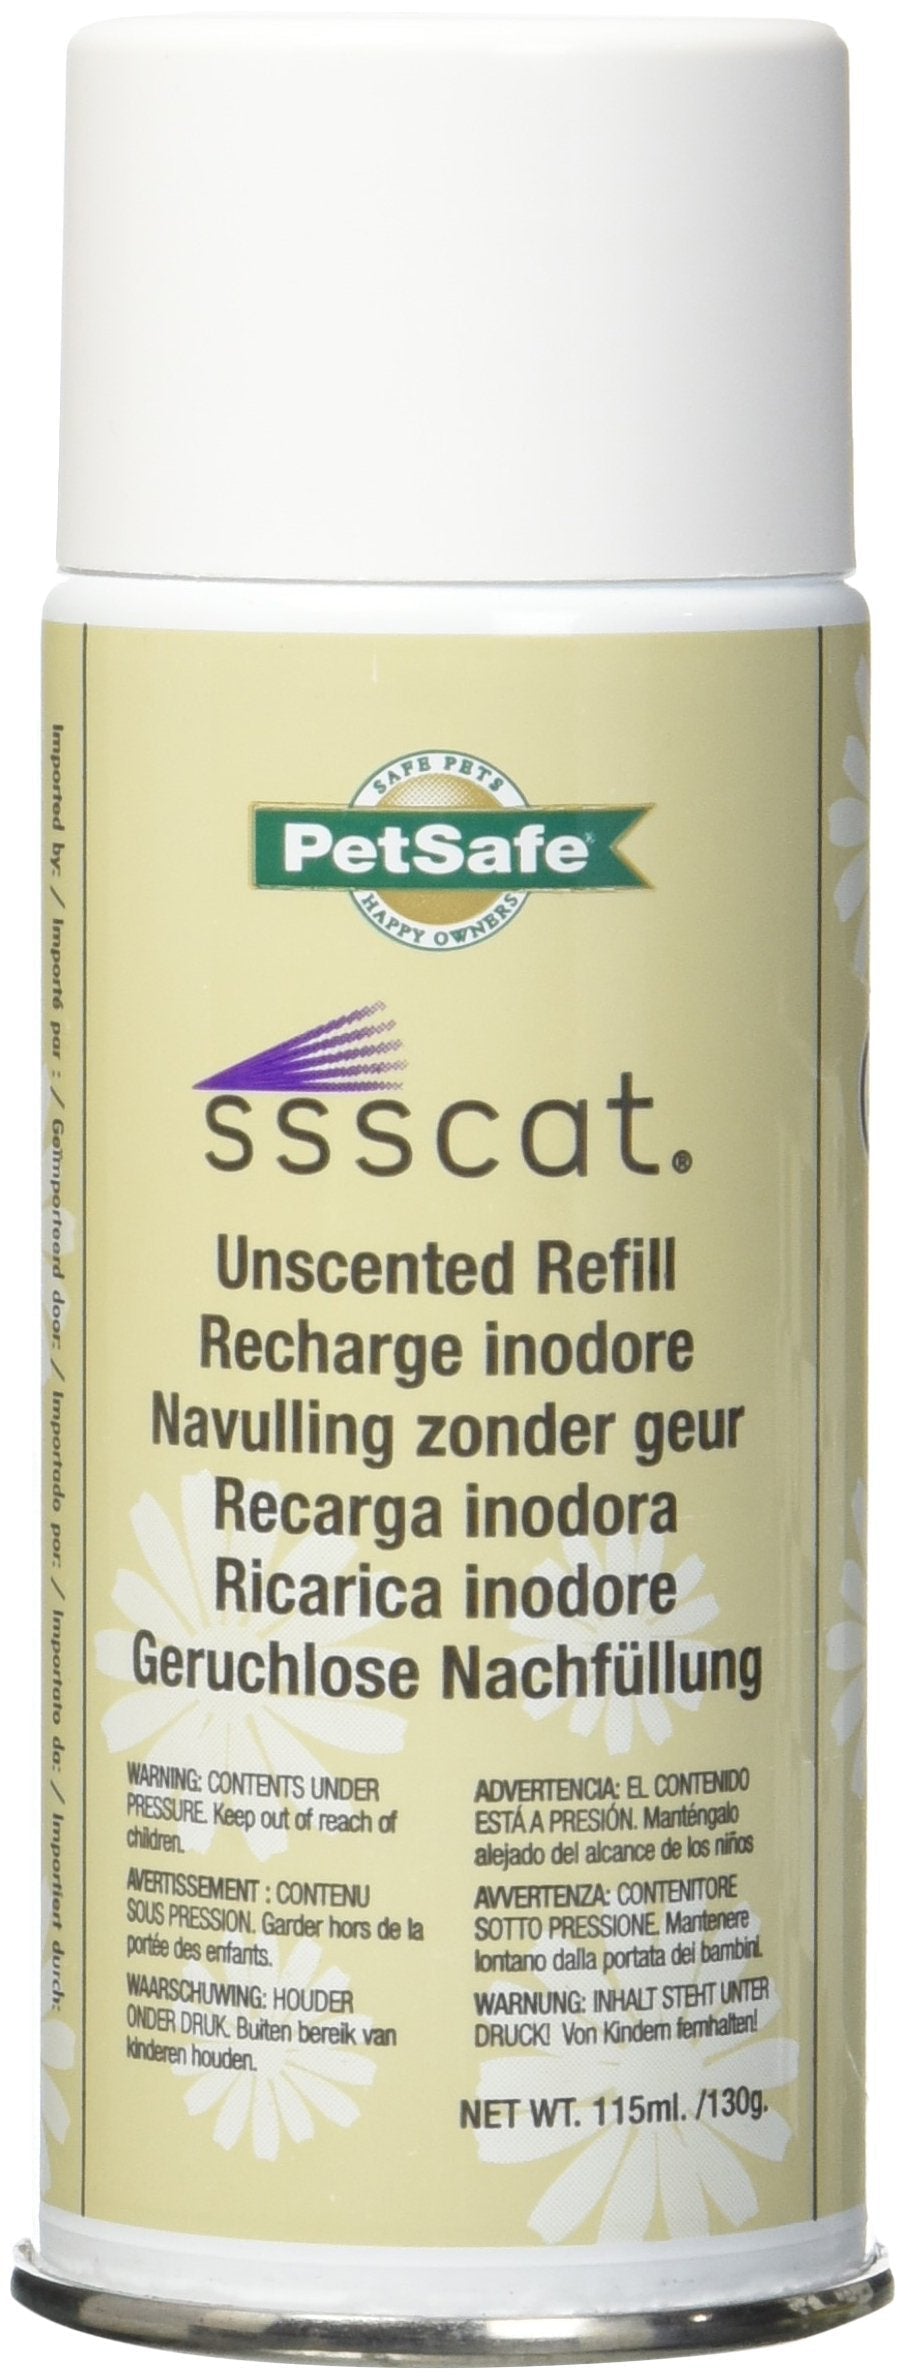 [Australia] - Petsafe Ssscat Repellent Deterrent Refills. 3 Pack. 